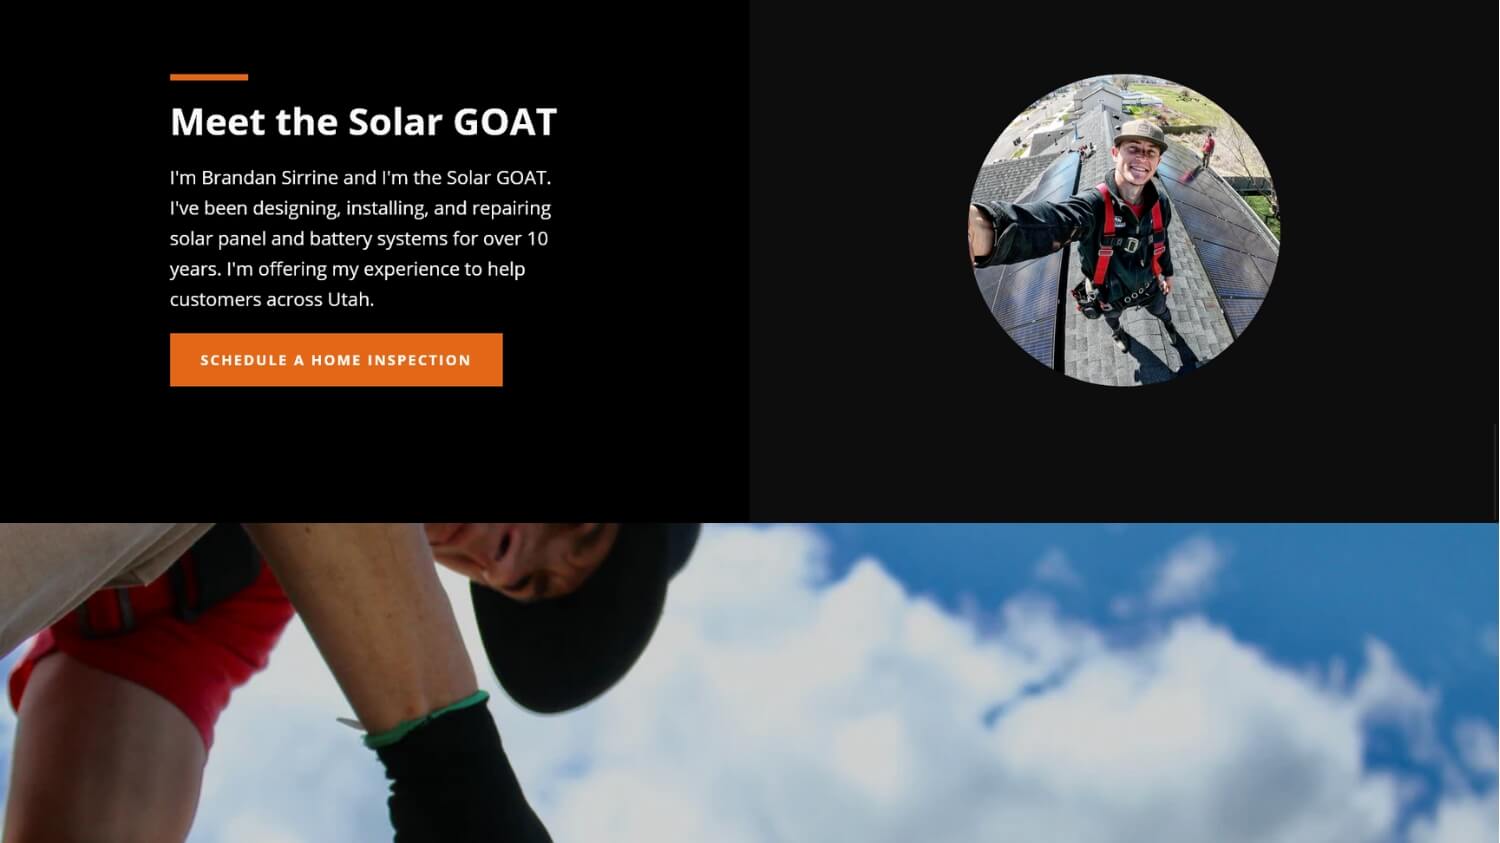 Solar GOAT - More details